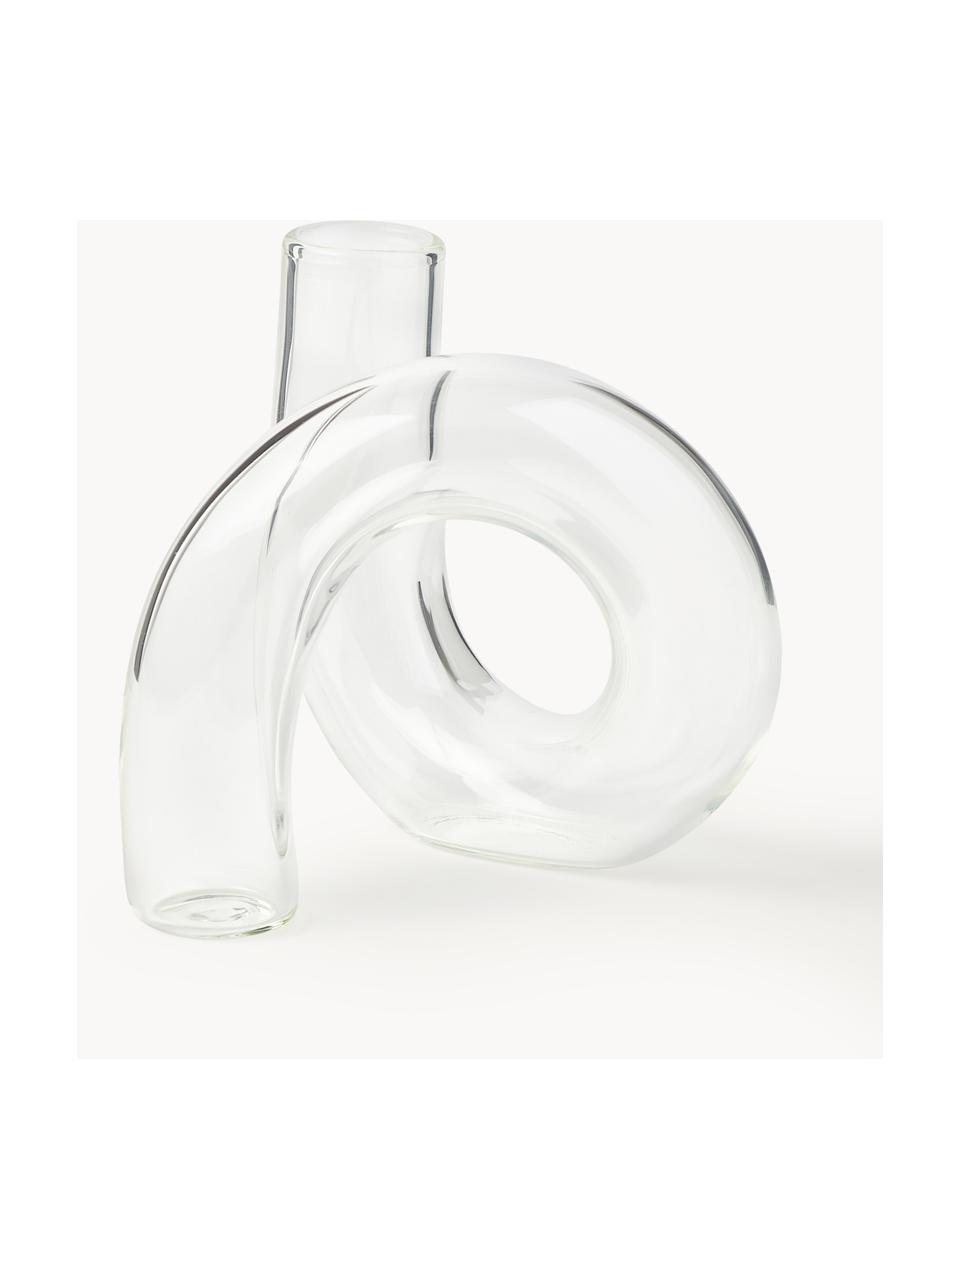 Handgemaakte vaas Zaida, H 12 cm, Glas, Transparant, B 11 x H 12 cm